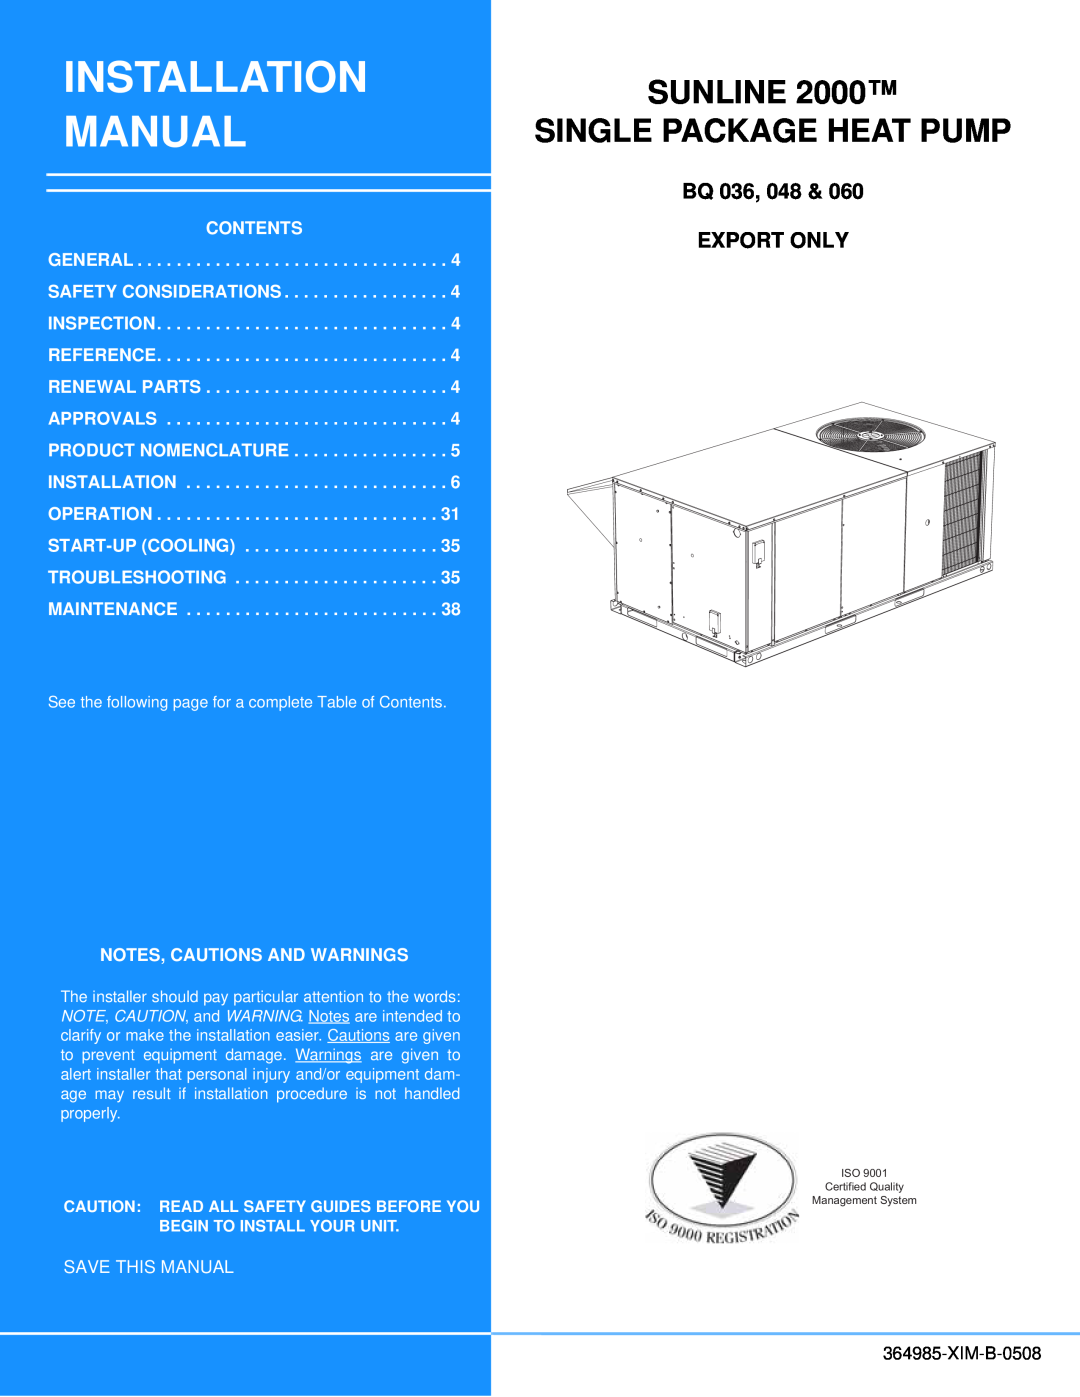 Johnson Controls BQ 036 installation manual Installation, Manual, Sunline, Single Package Heat Pump, Bq, Export Only 